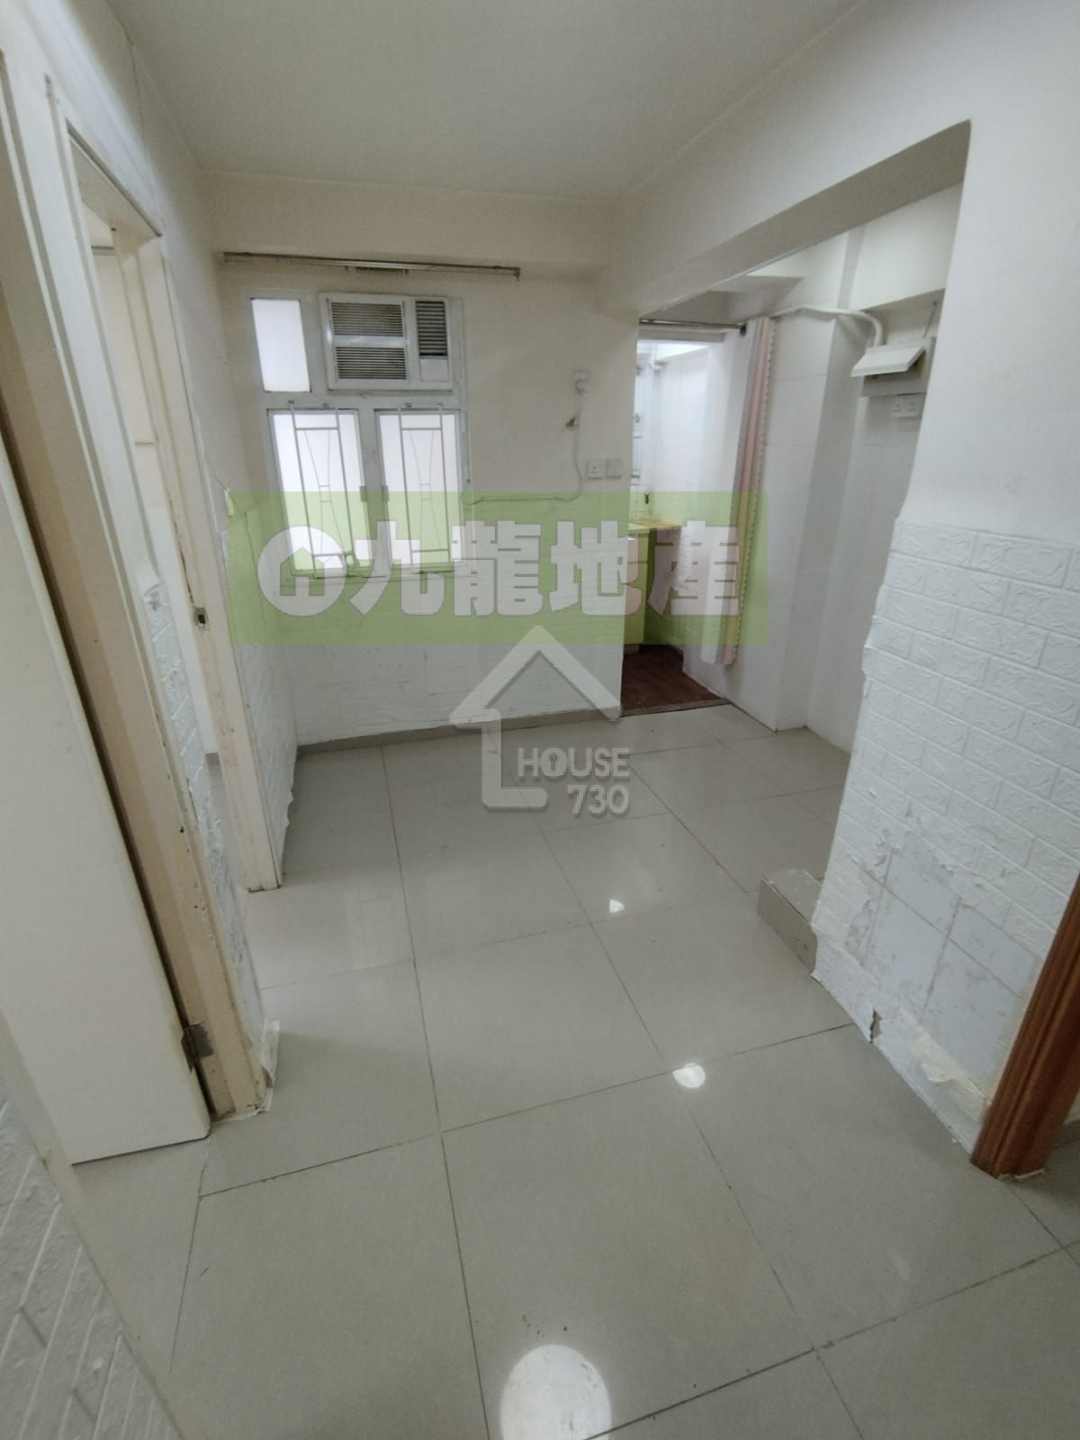 Sham Shui Po HAI TIN MANSION Middle Floor Living Room House730-6685498